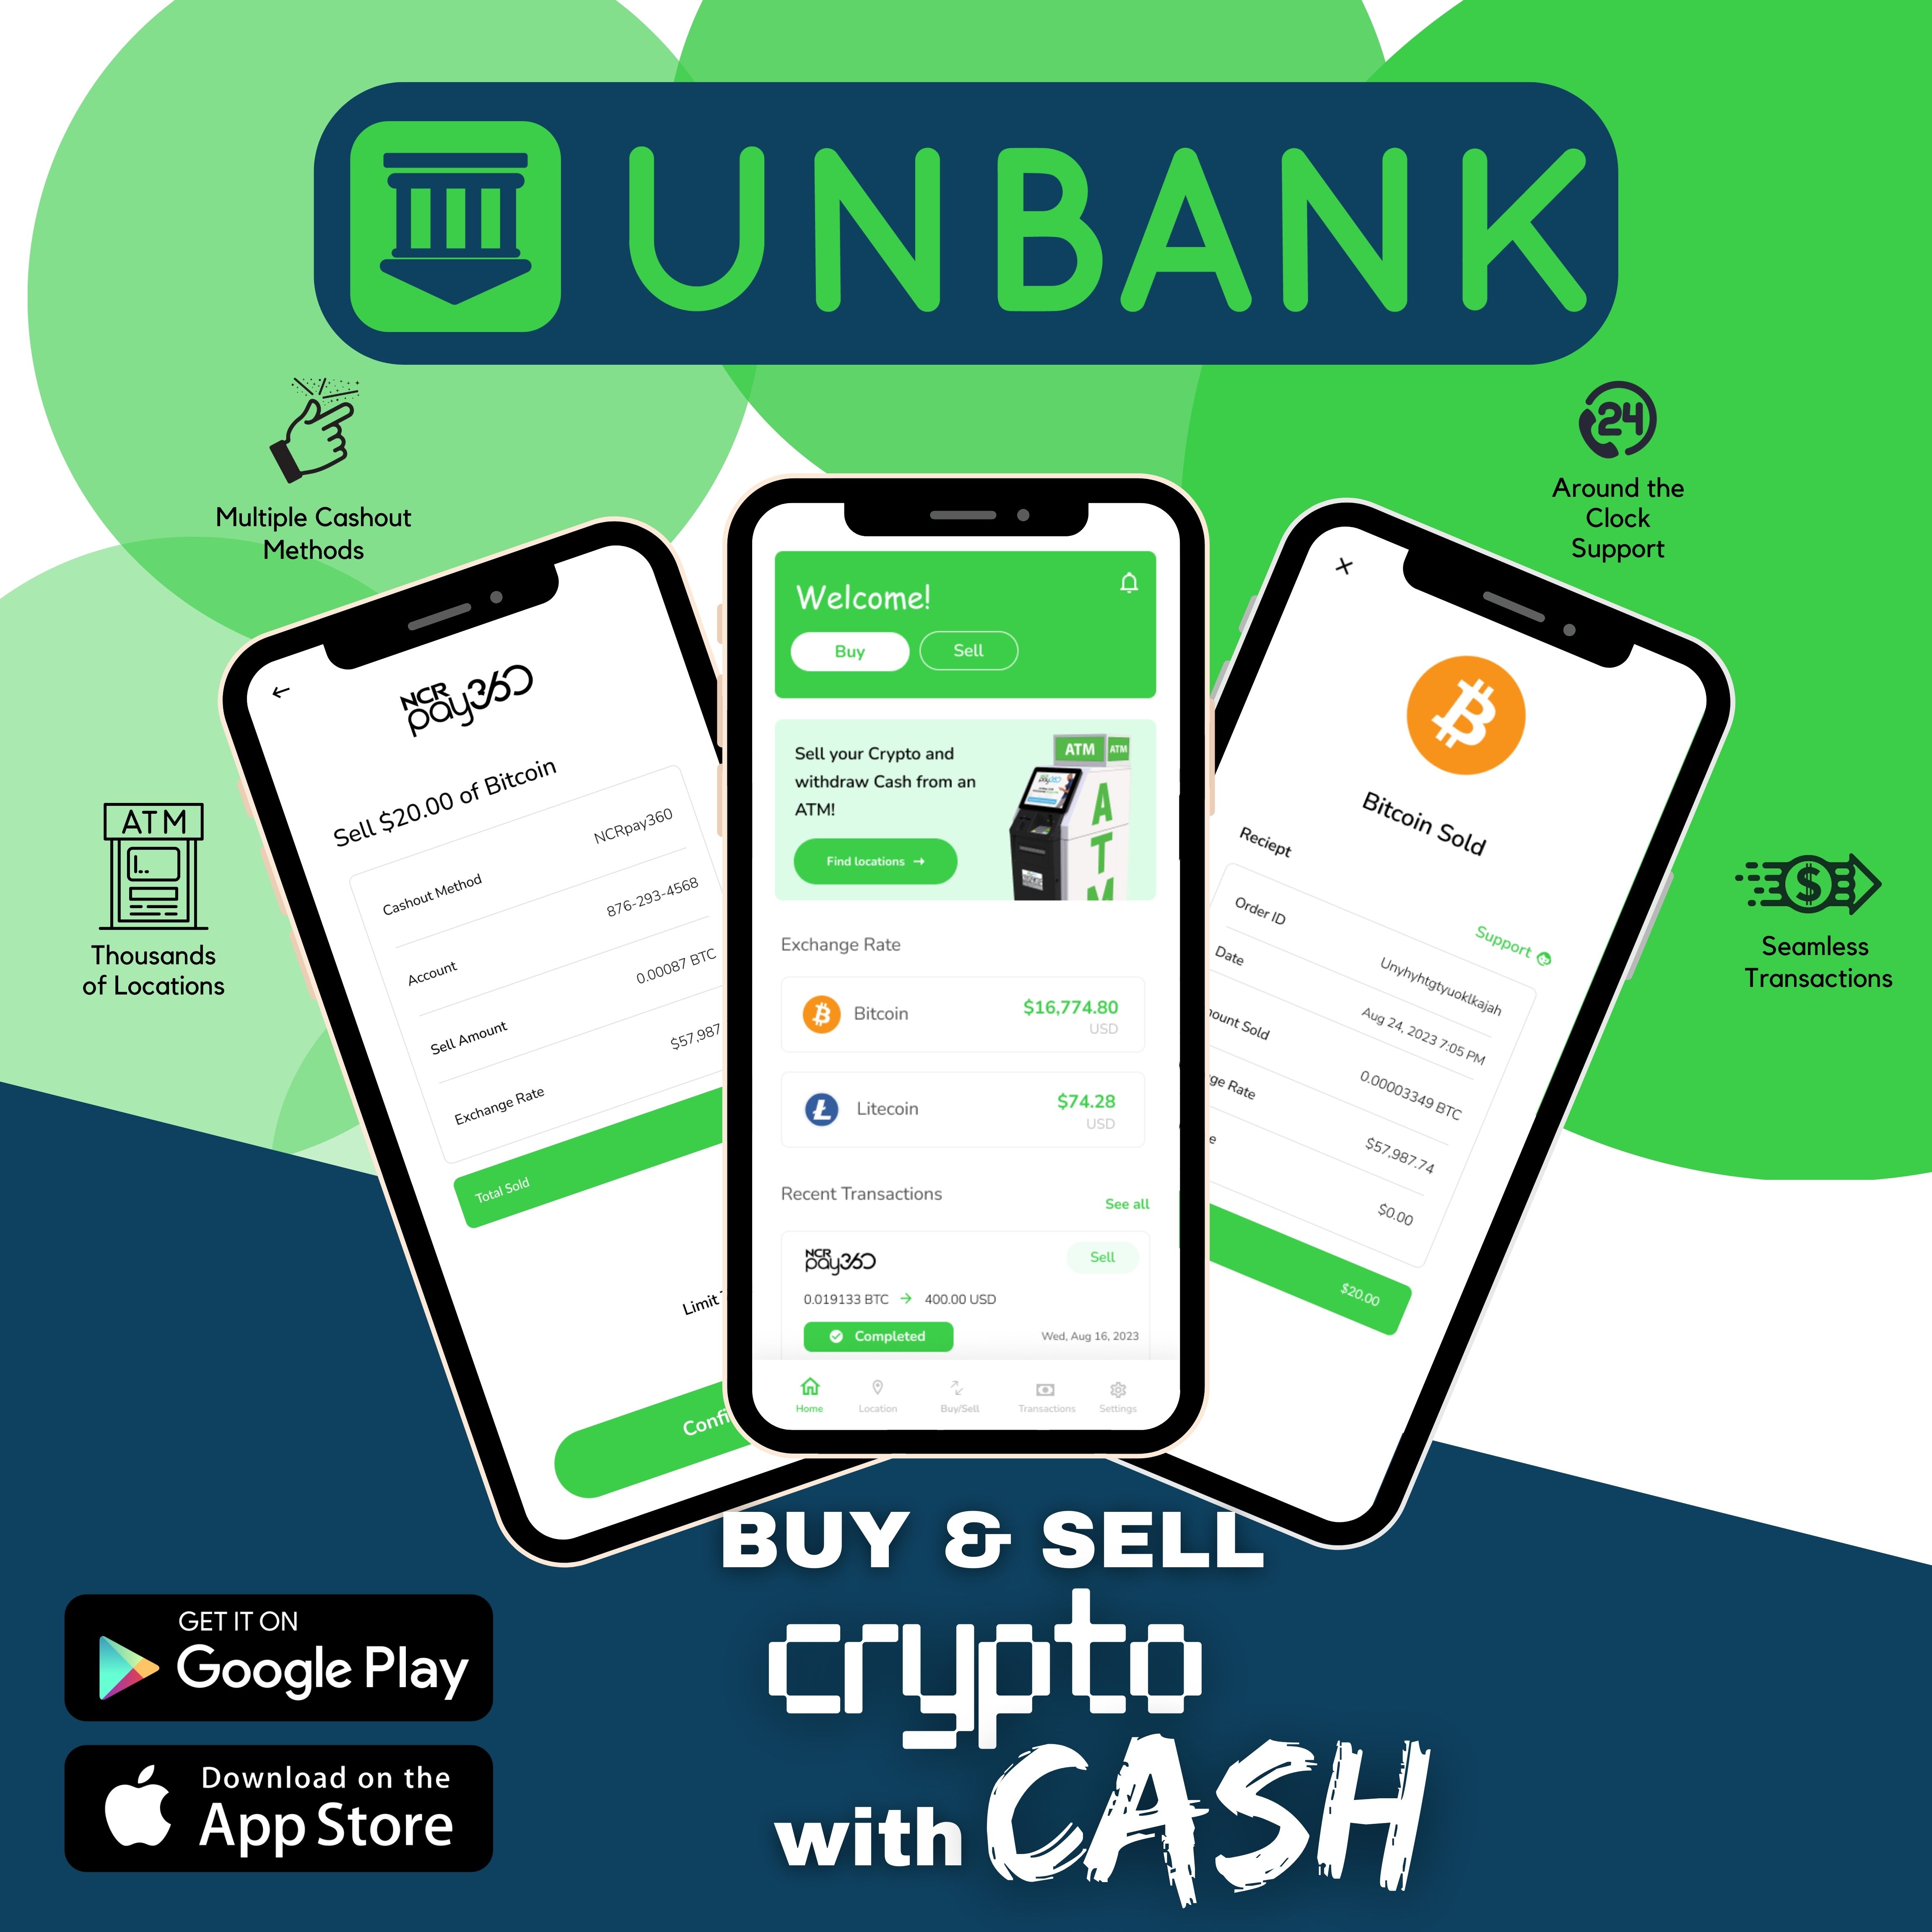 Unbank Mobile App. Download Now!